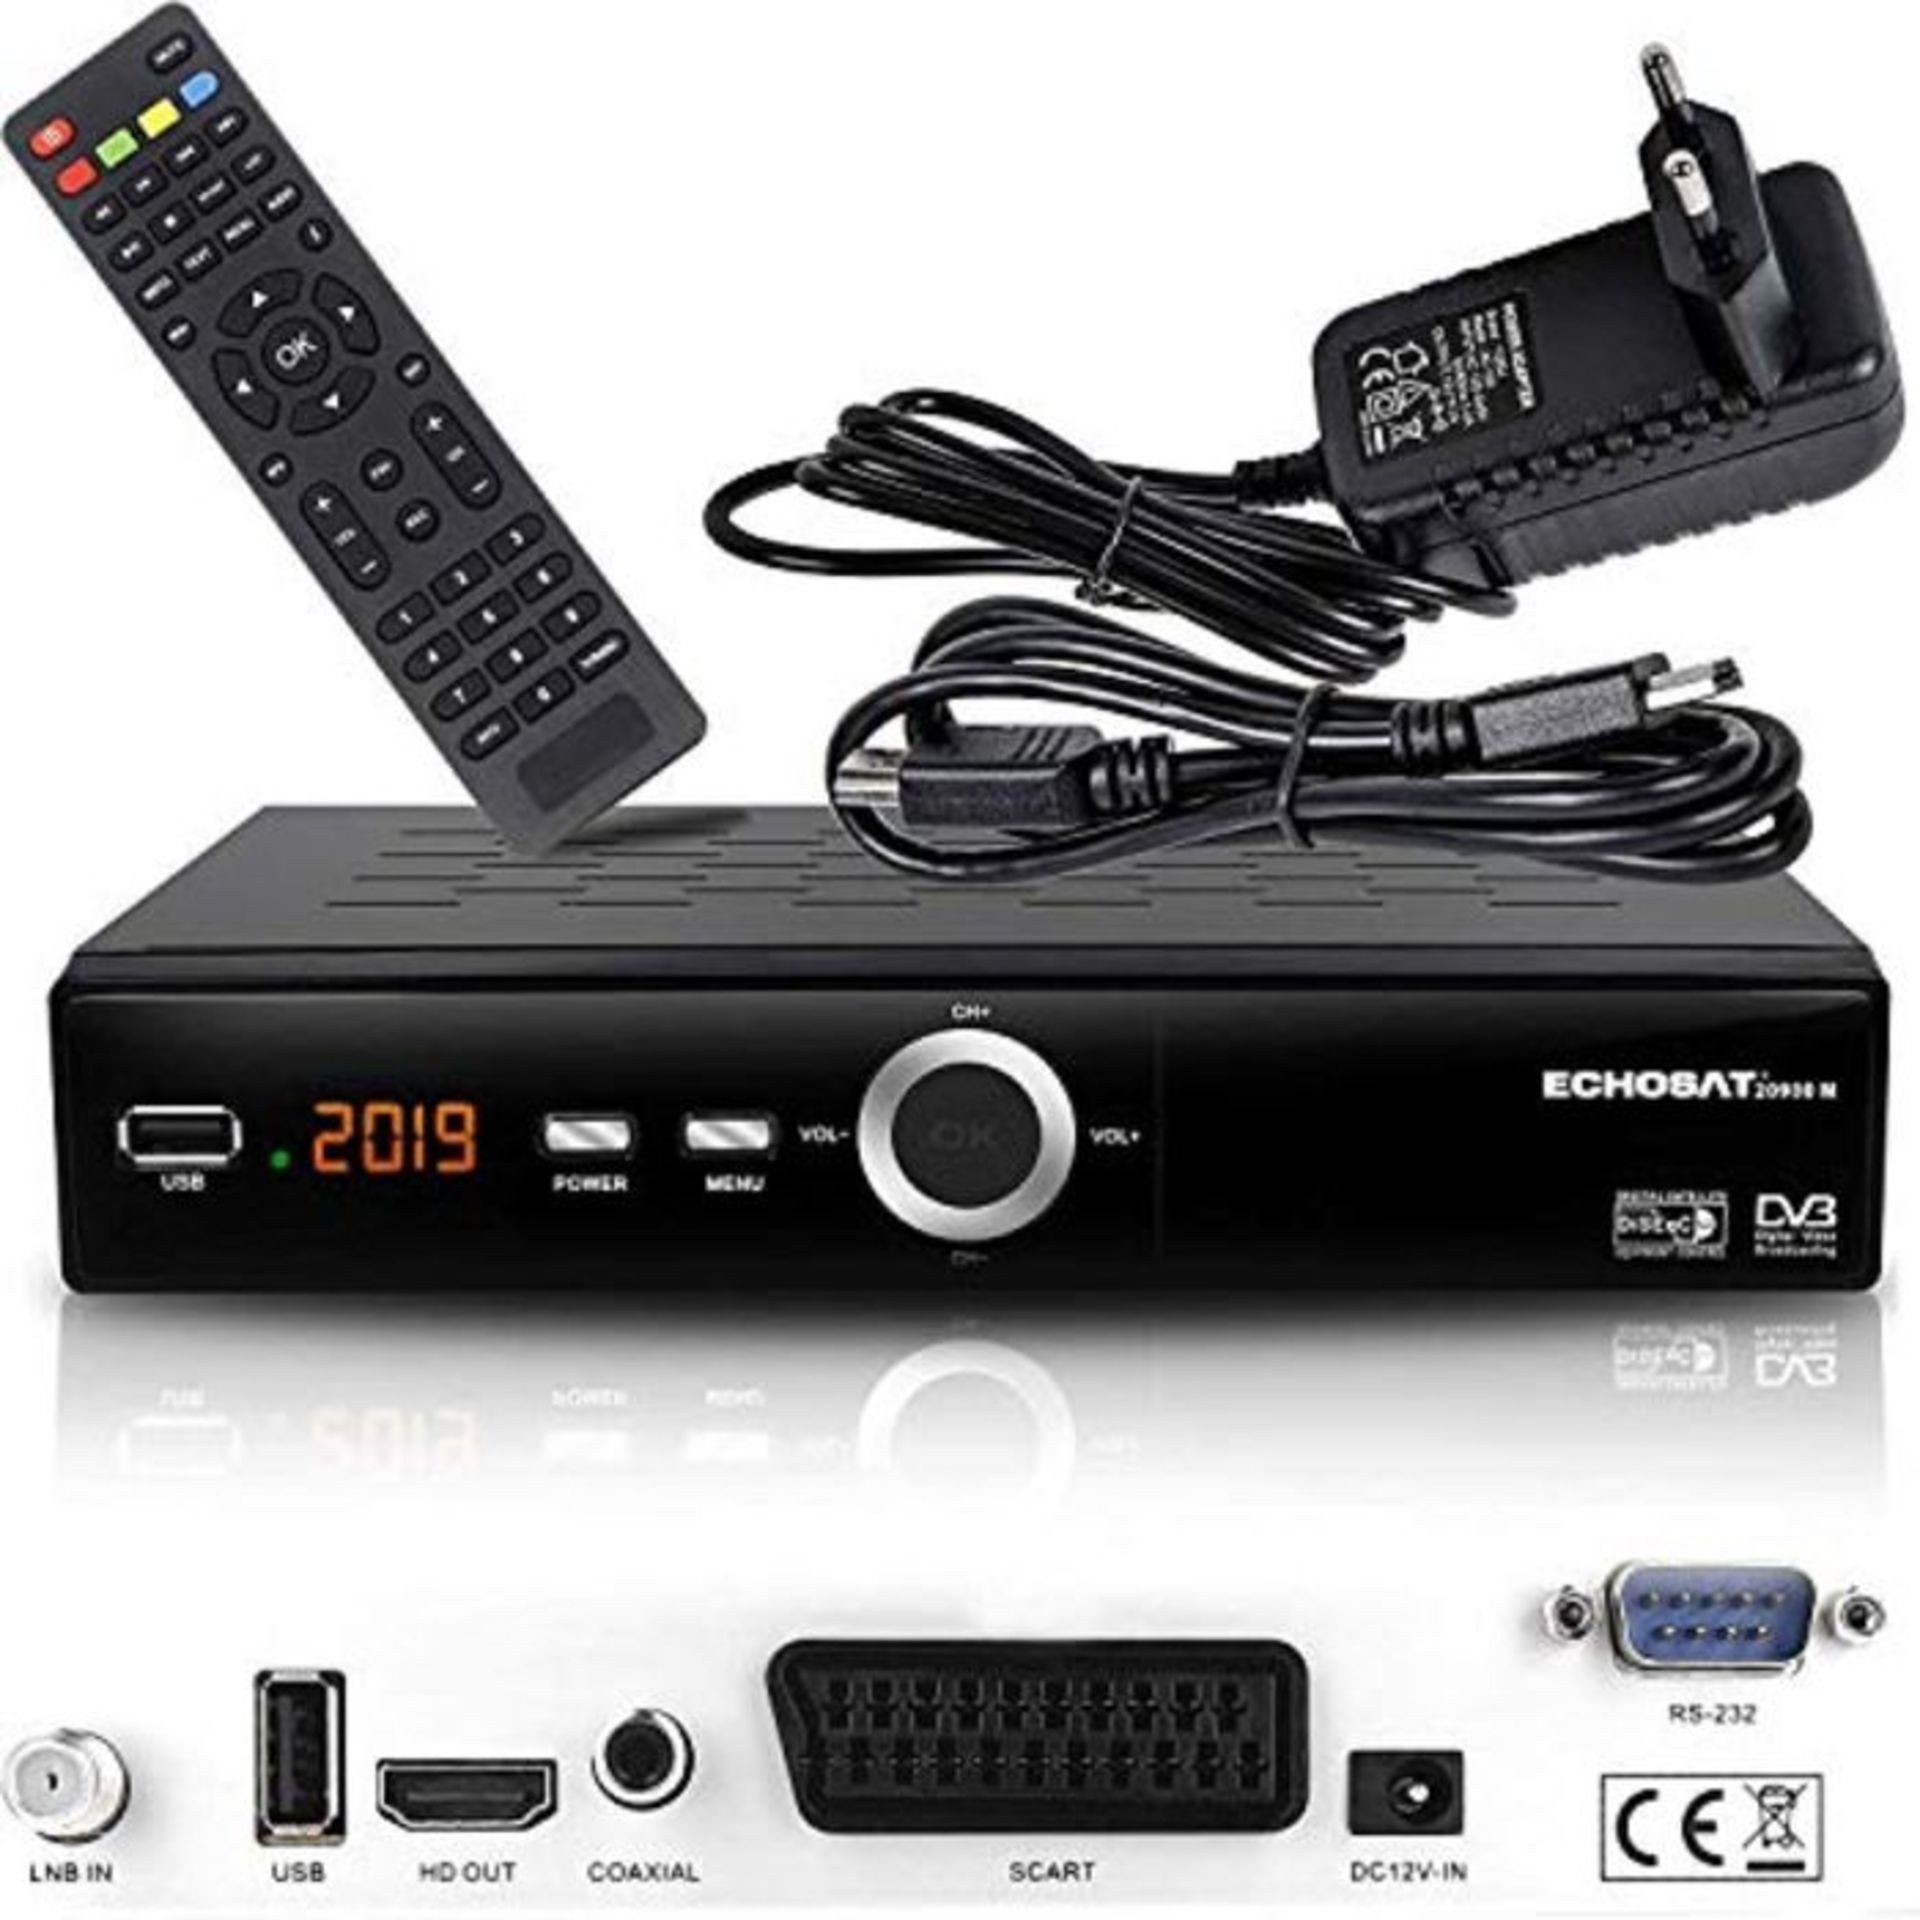 hd-line Echosat 20900 M Digital Satelliten Sat Receiver - (HDTV , DVB-S/S2 , HDMI , SC